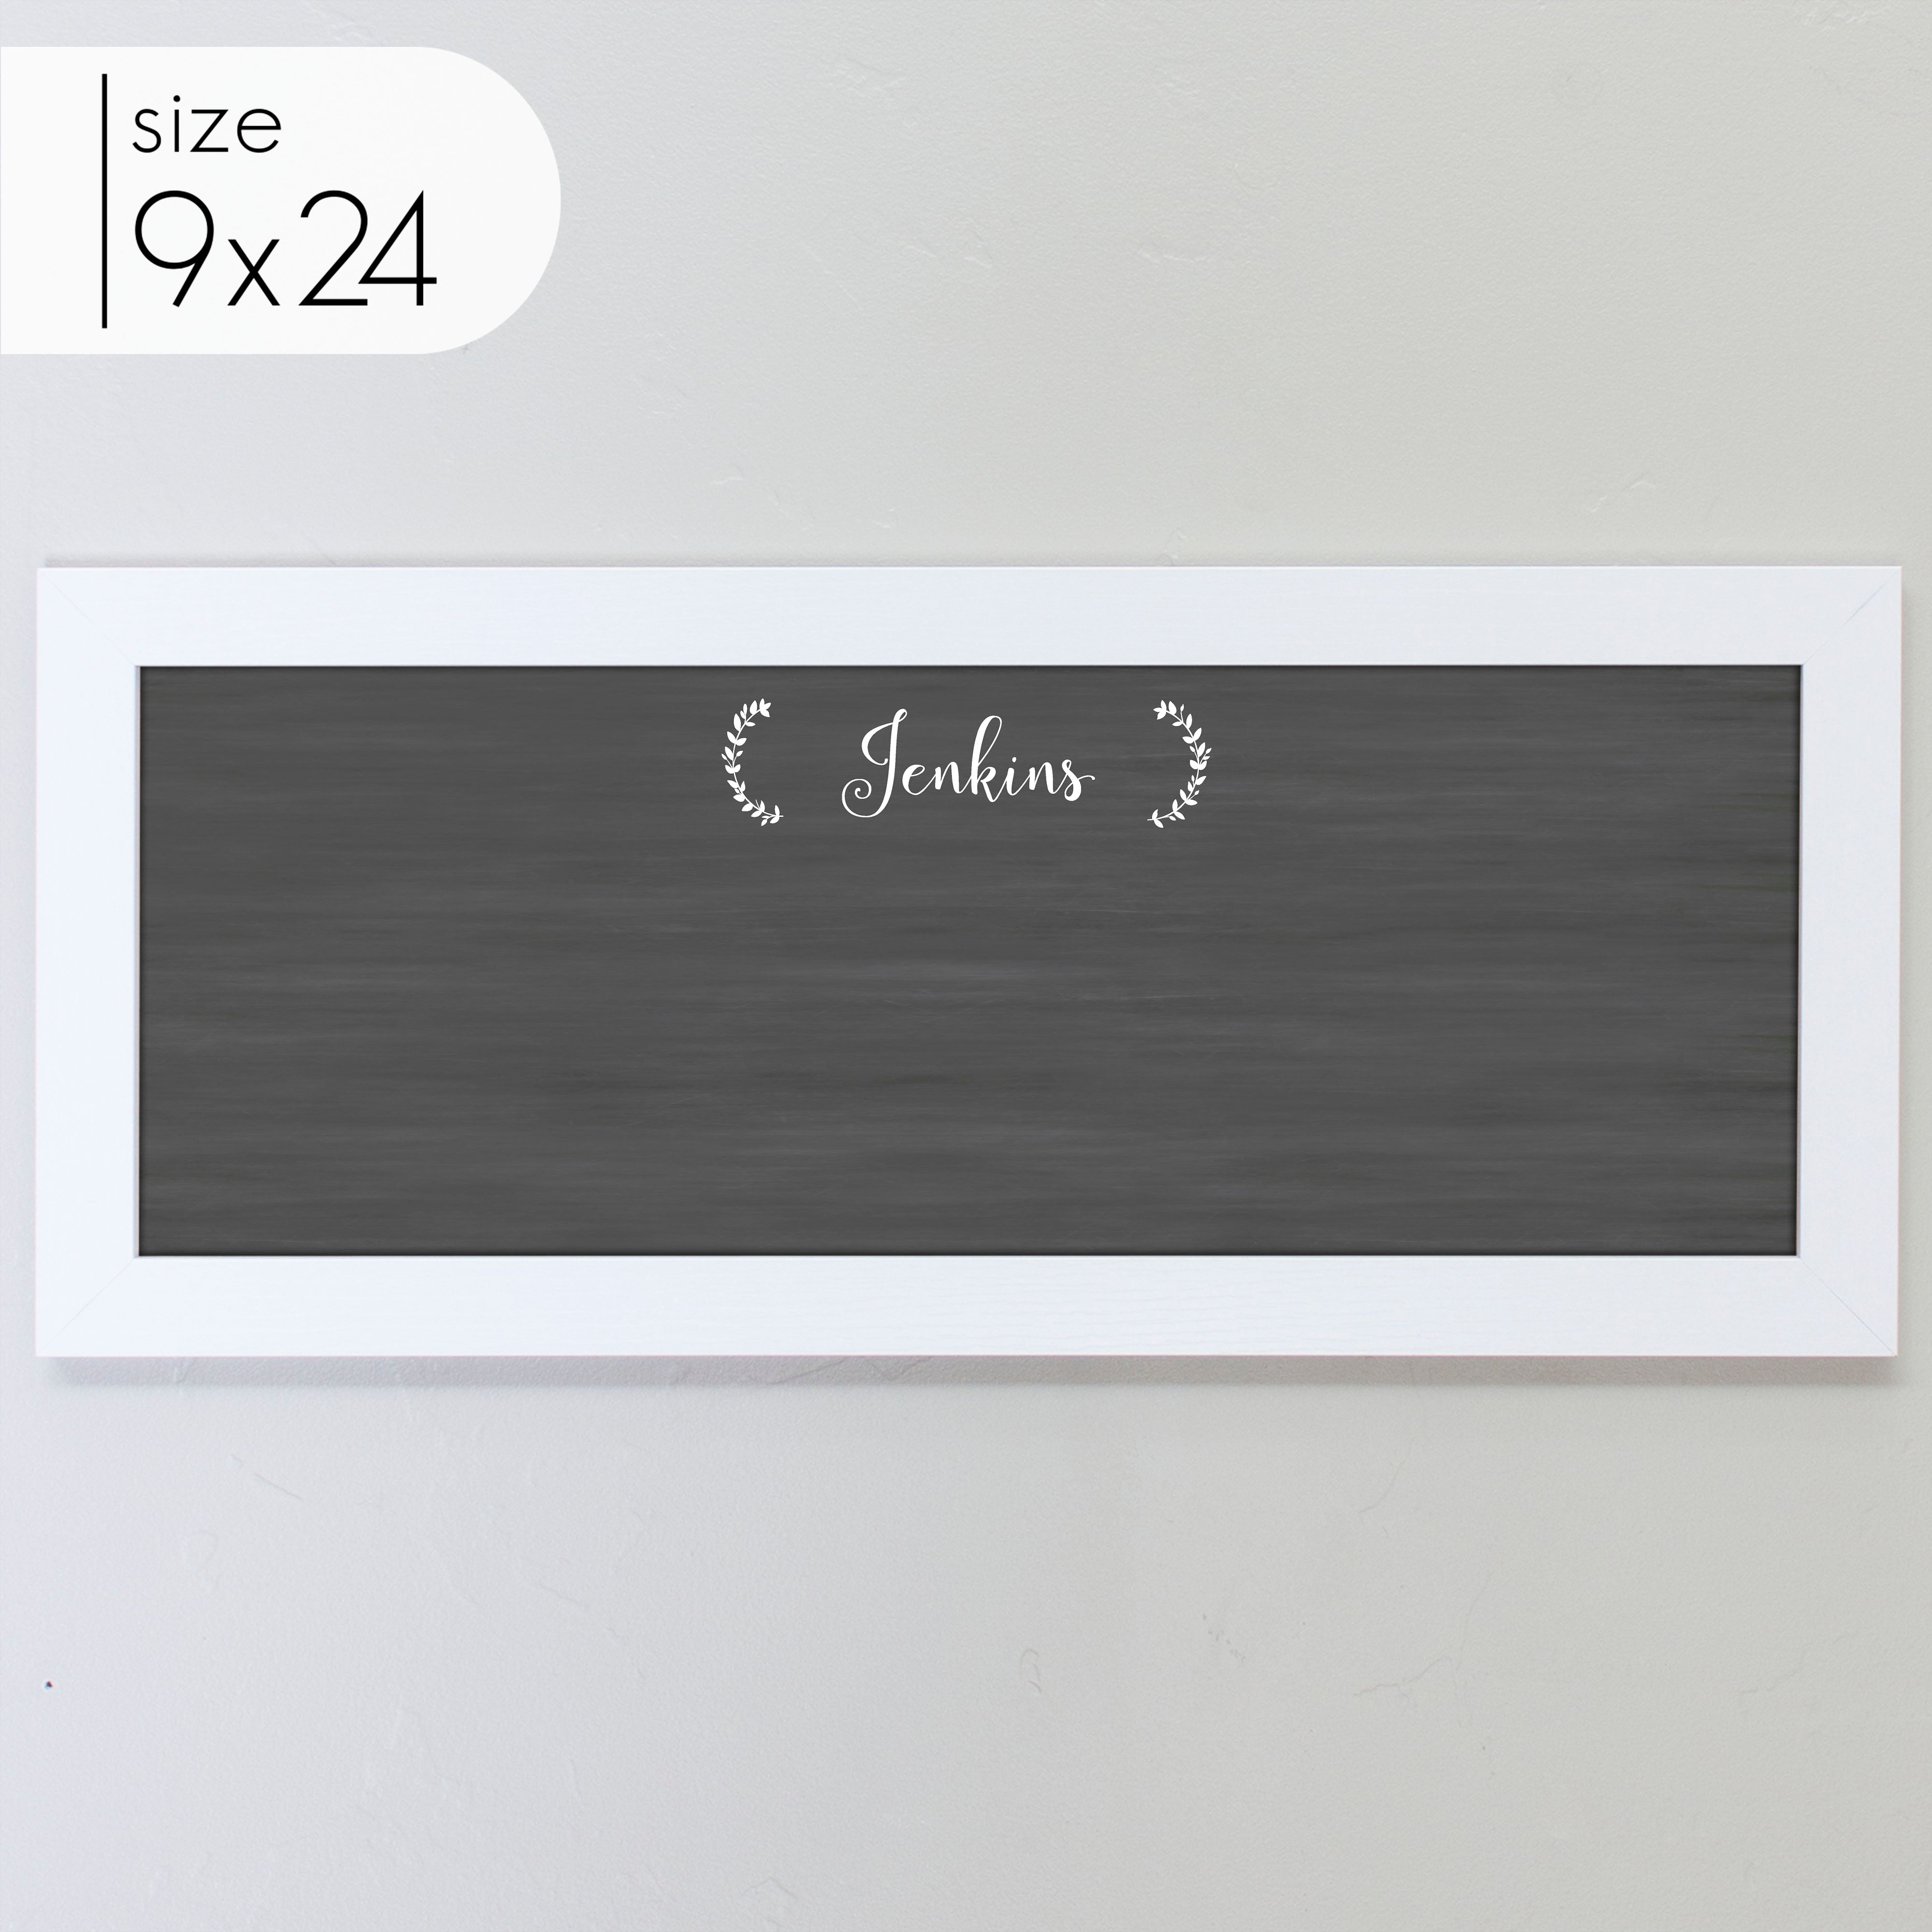 Slim Framed Chalkboard | Horizontal Eagleton